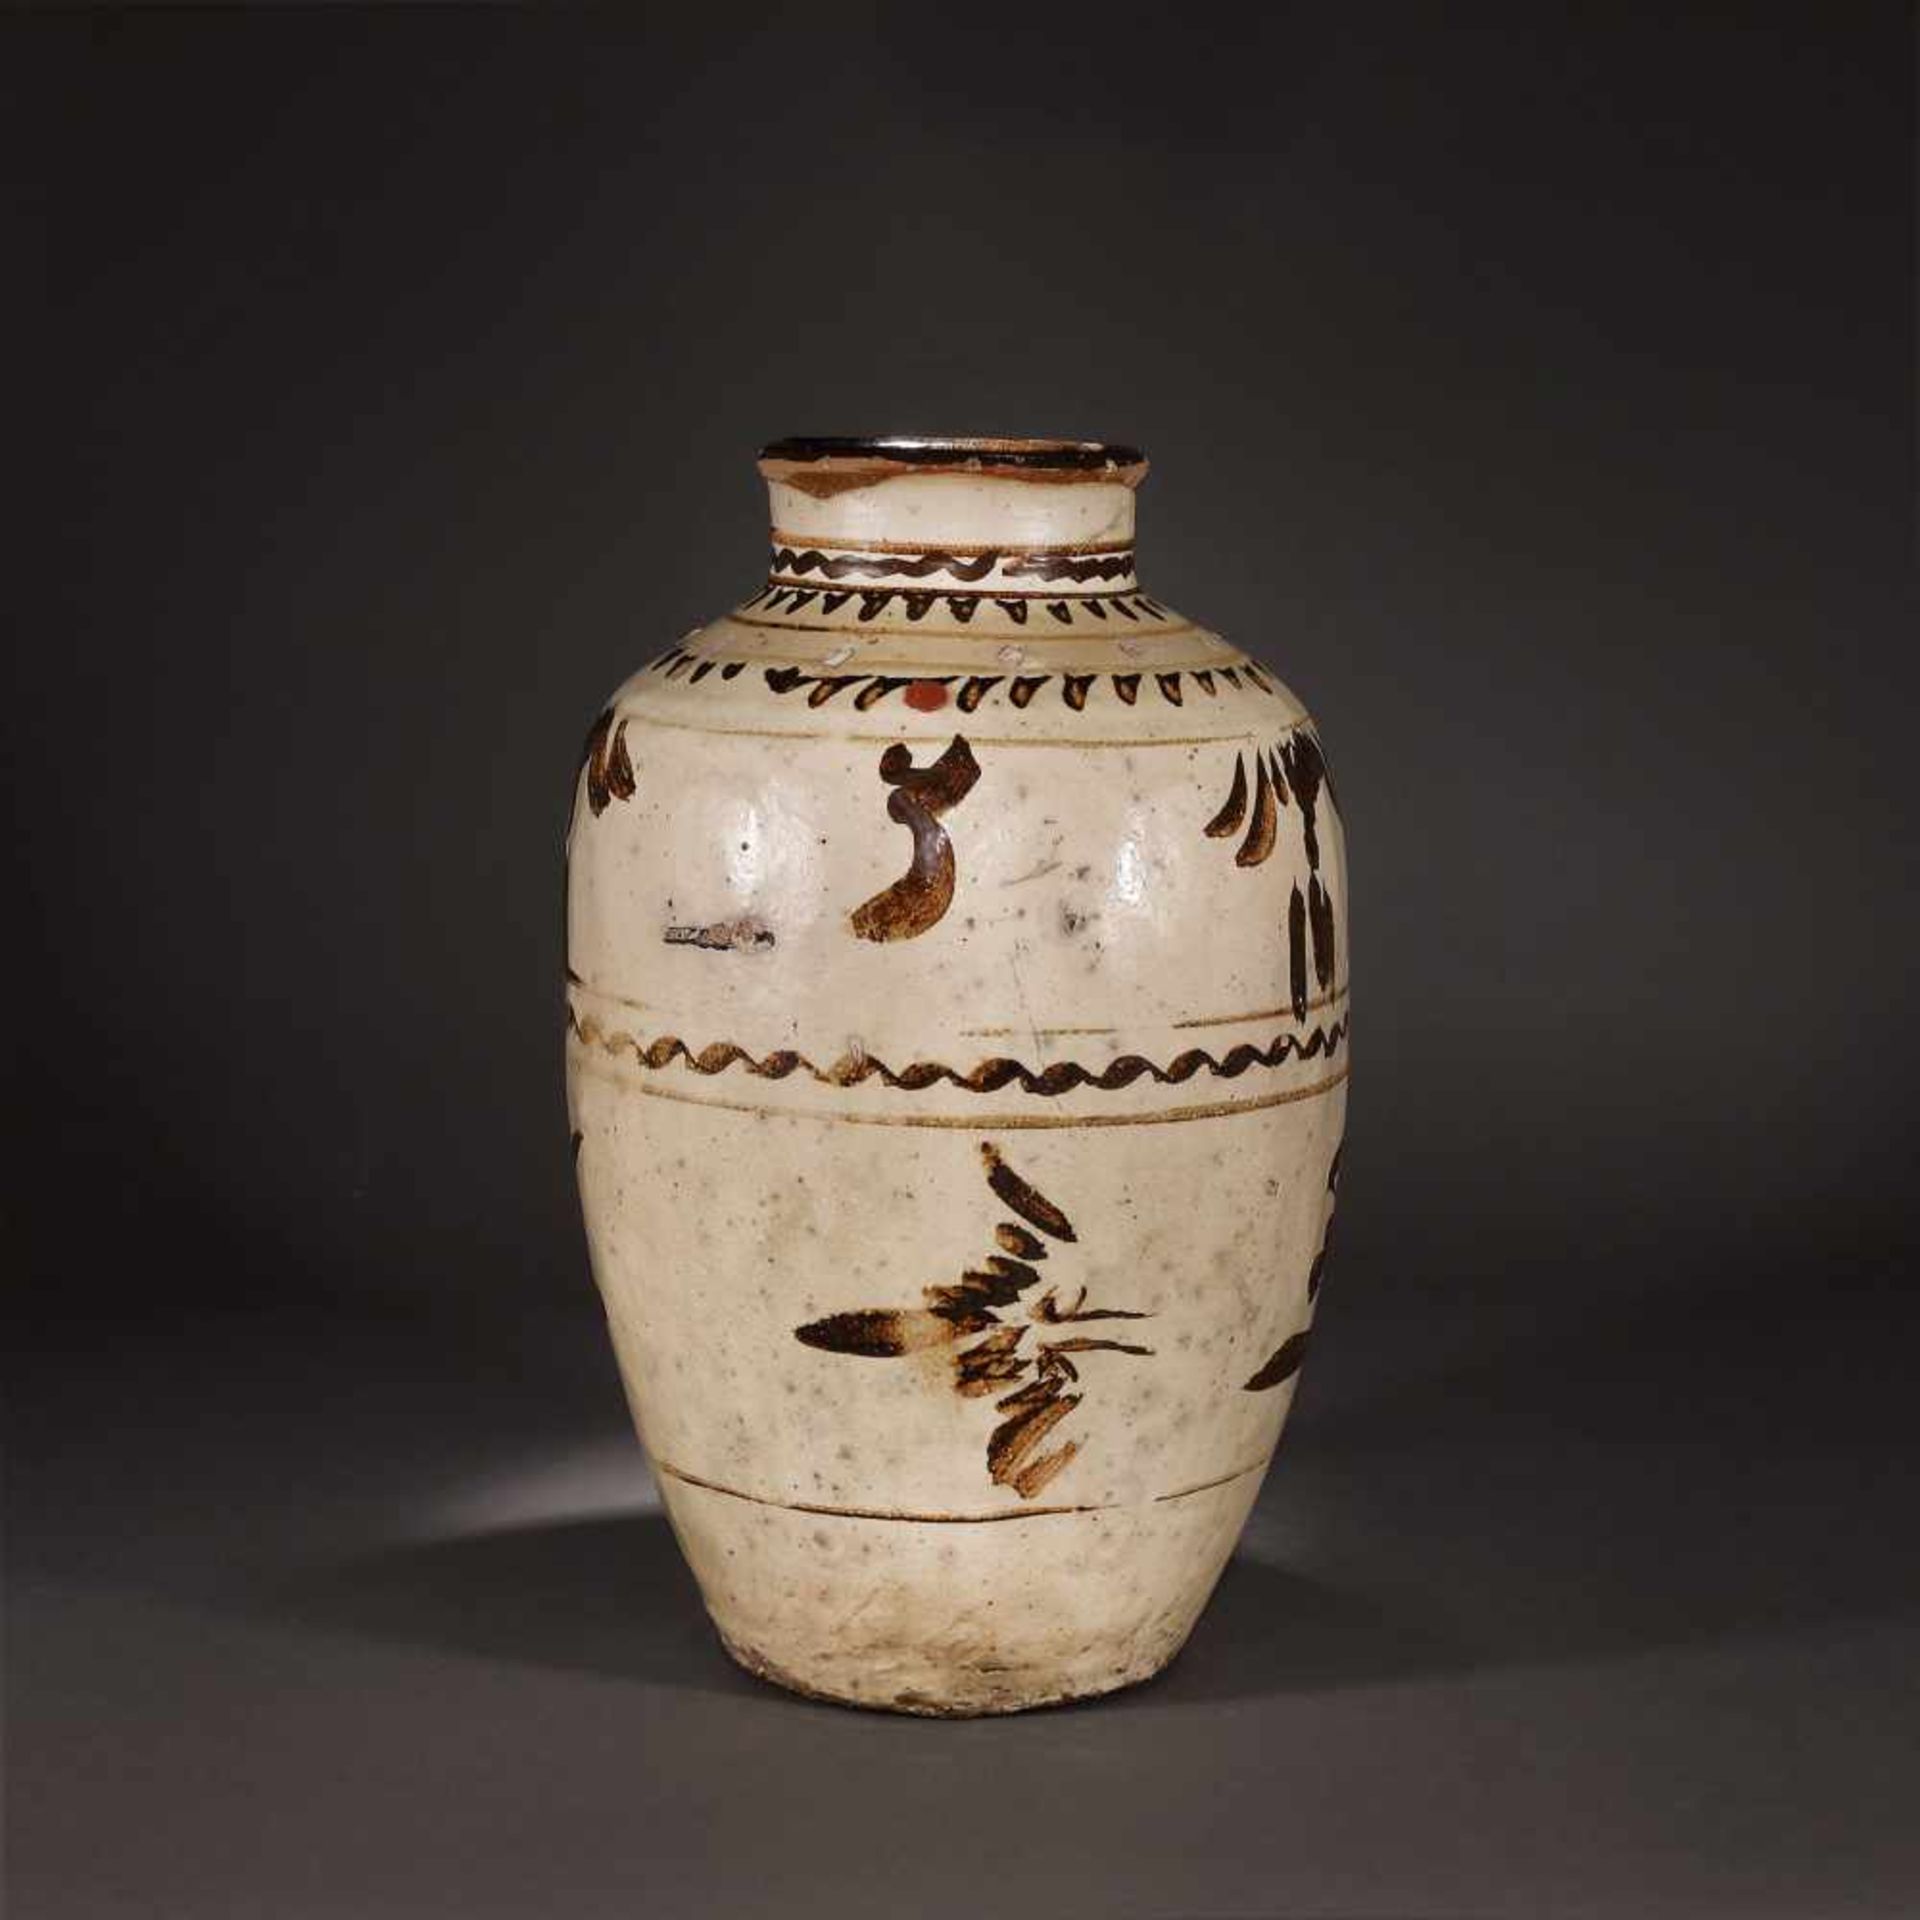 Impressive Cizhou wine vessel, glazed ceramics, end of the Yuan Era, China, mid 14th